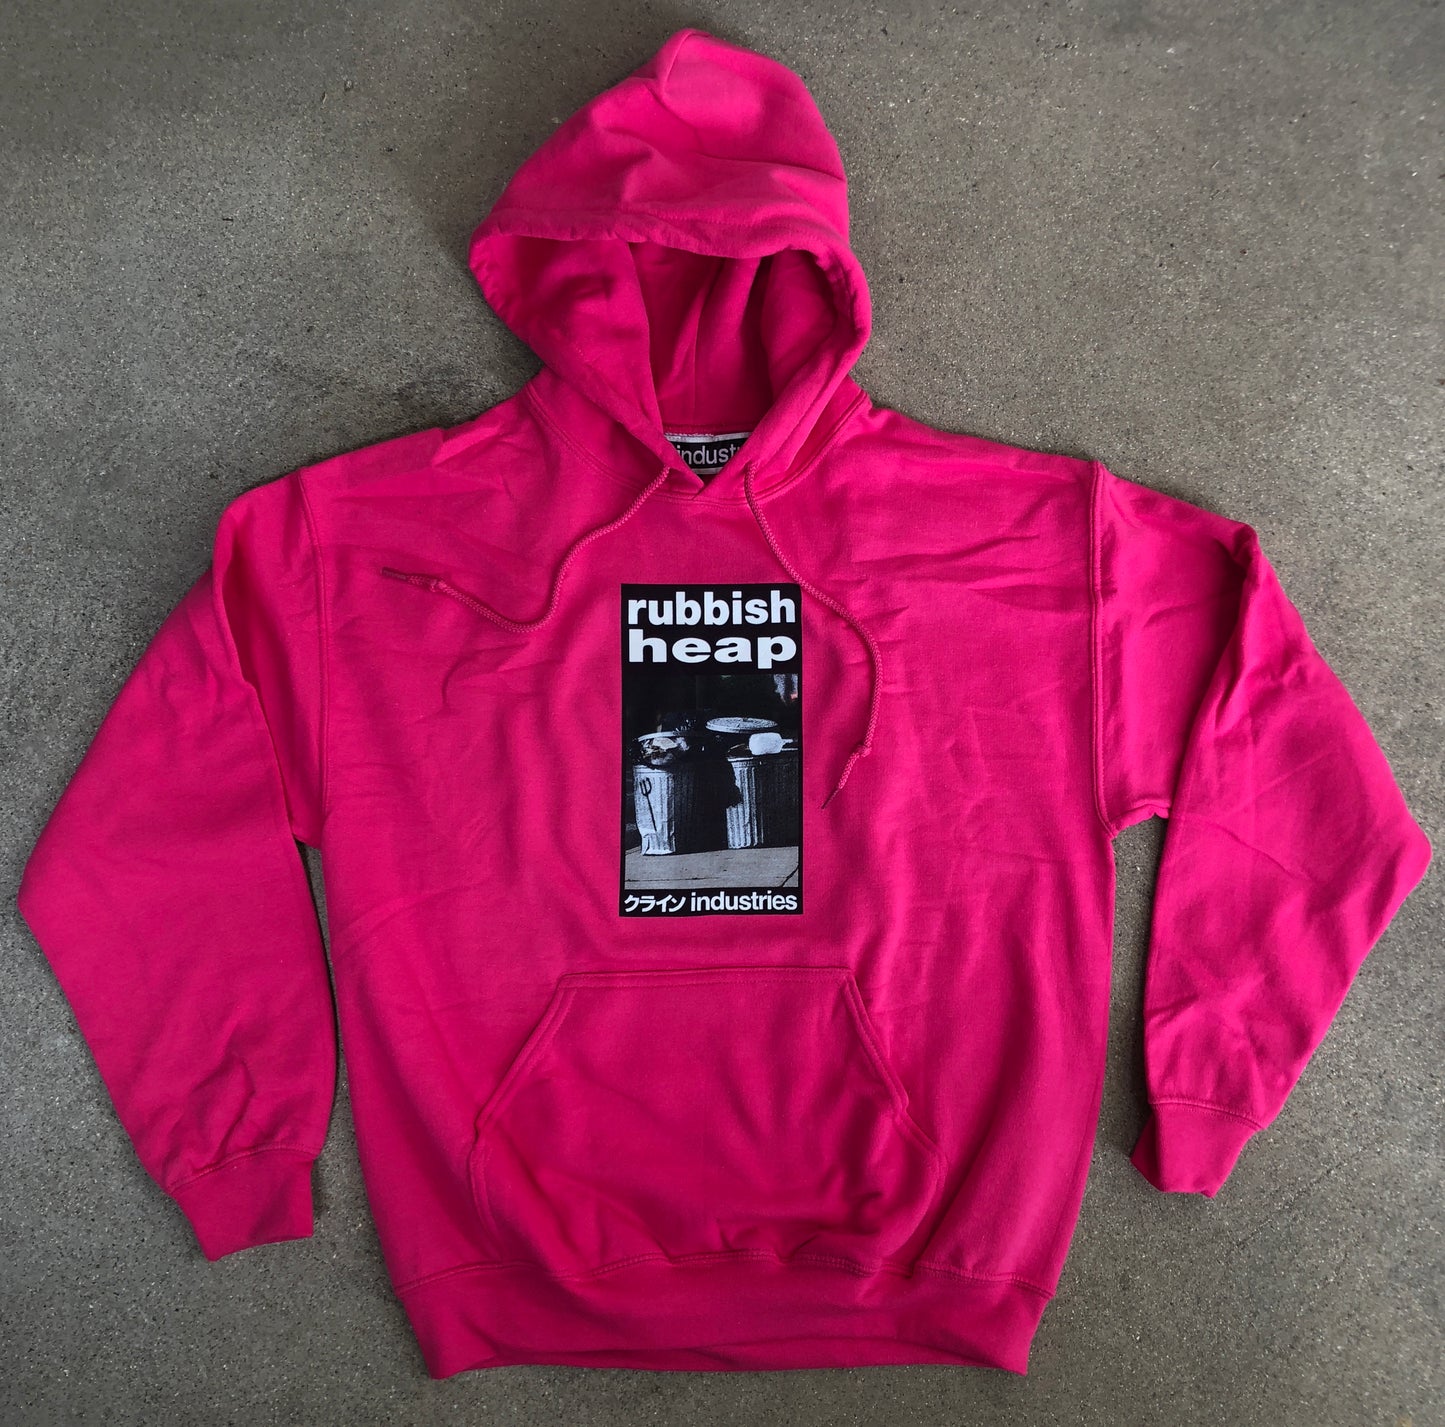 rubbish heap hooded sweatshirt - PINK/HELOCONIA w/ free sticker pack